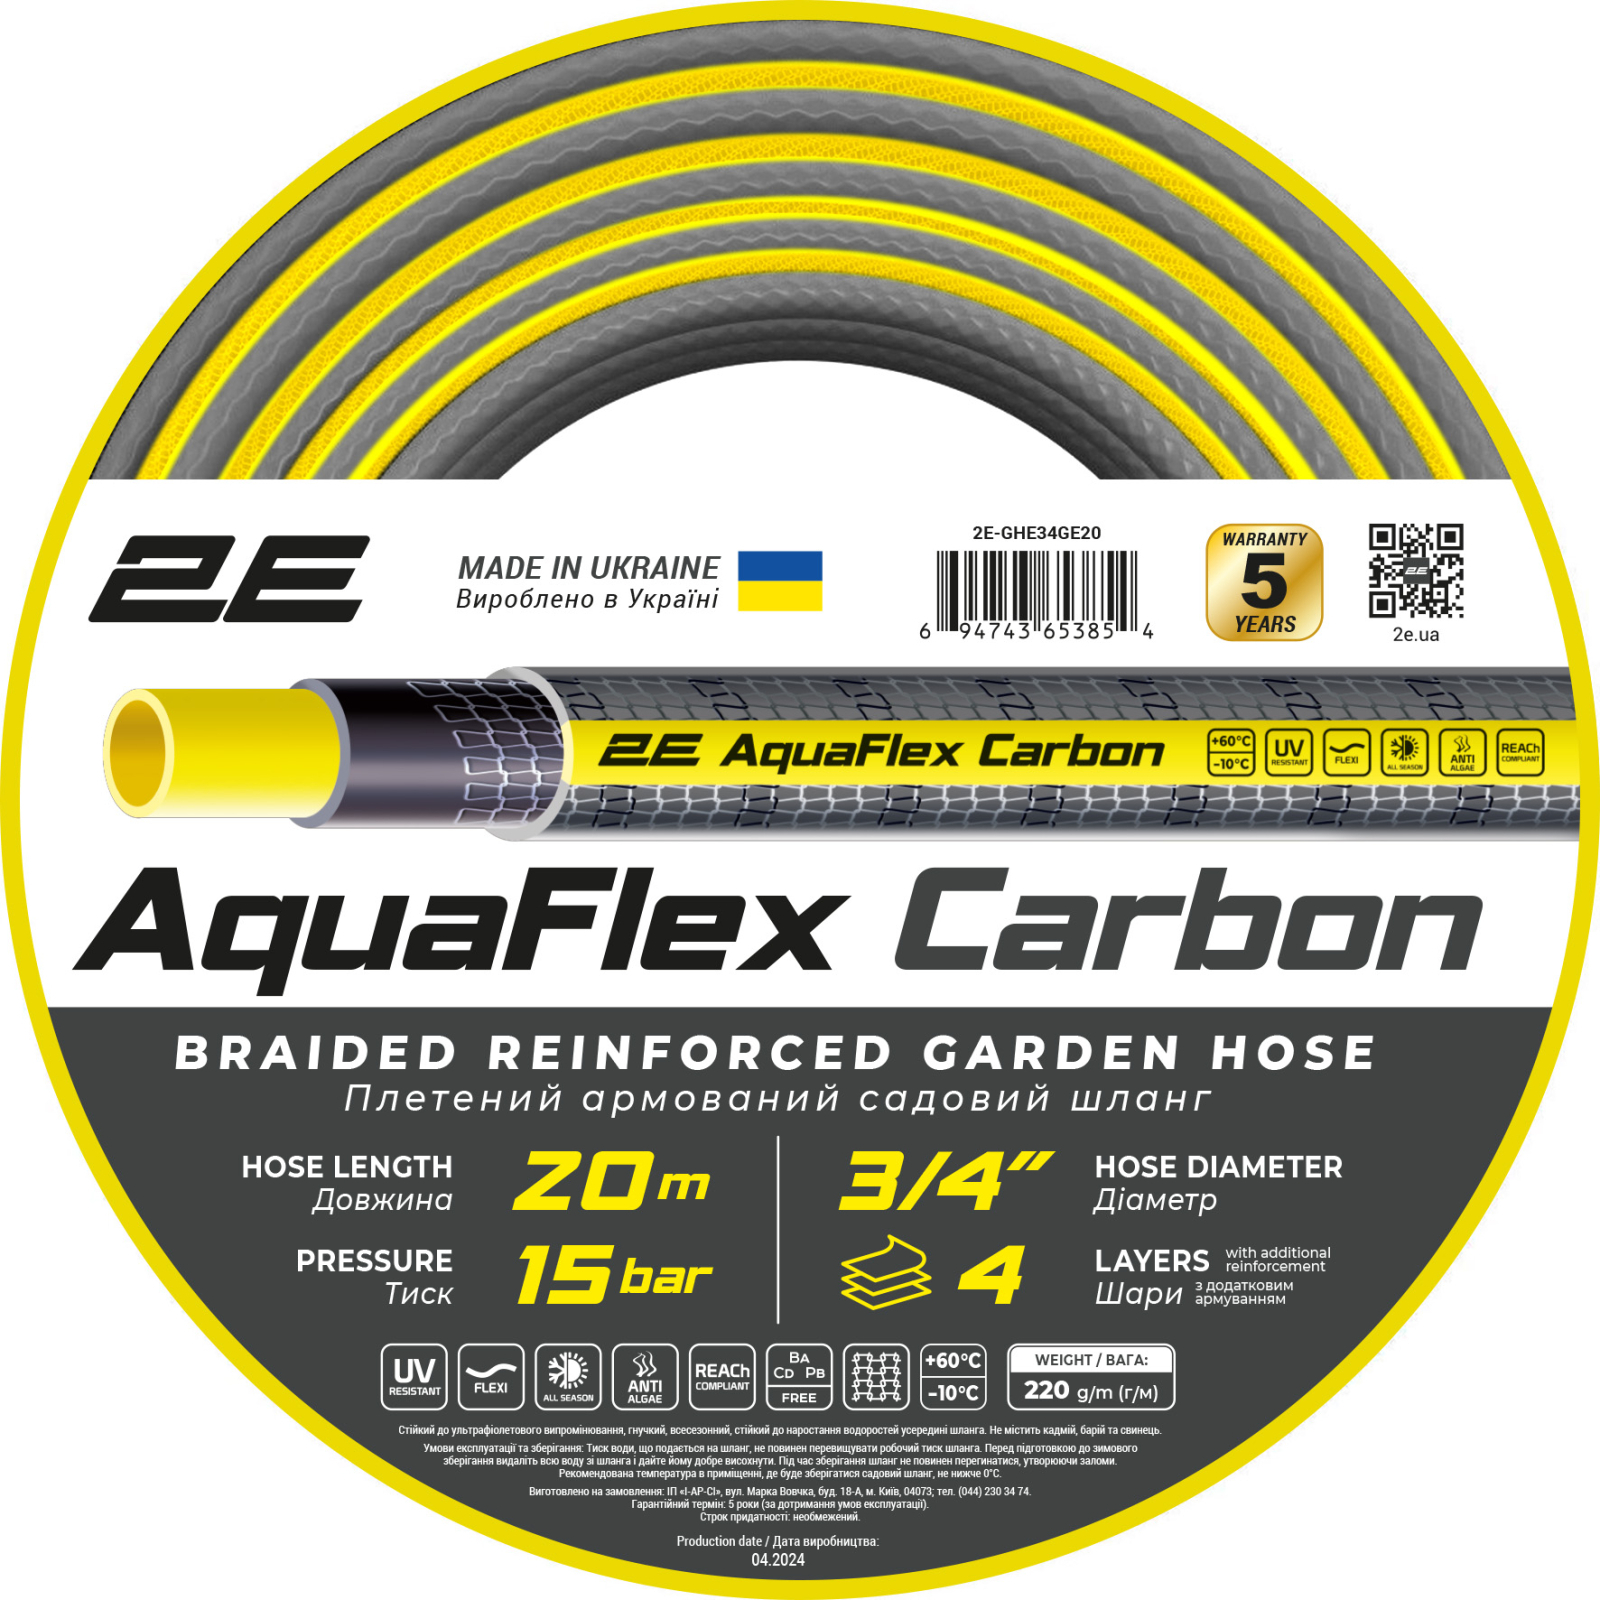 Поливочный шланг 2E AquaFlex Carbon 3/4", 20м, 4 шари, 20бар, -10+60°C (2E-GHE34GE20)